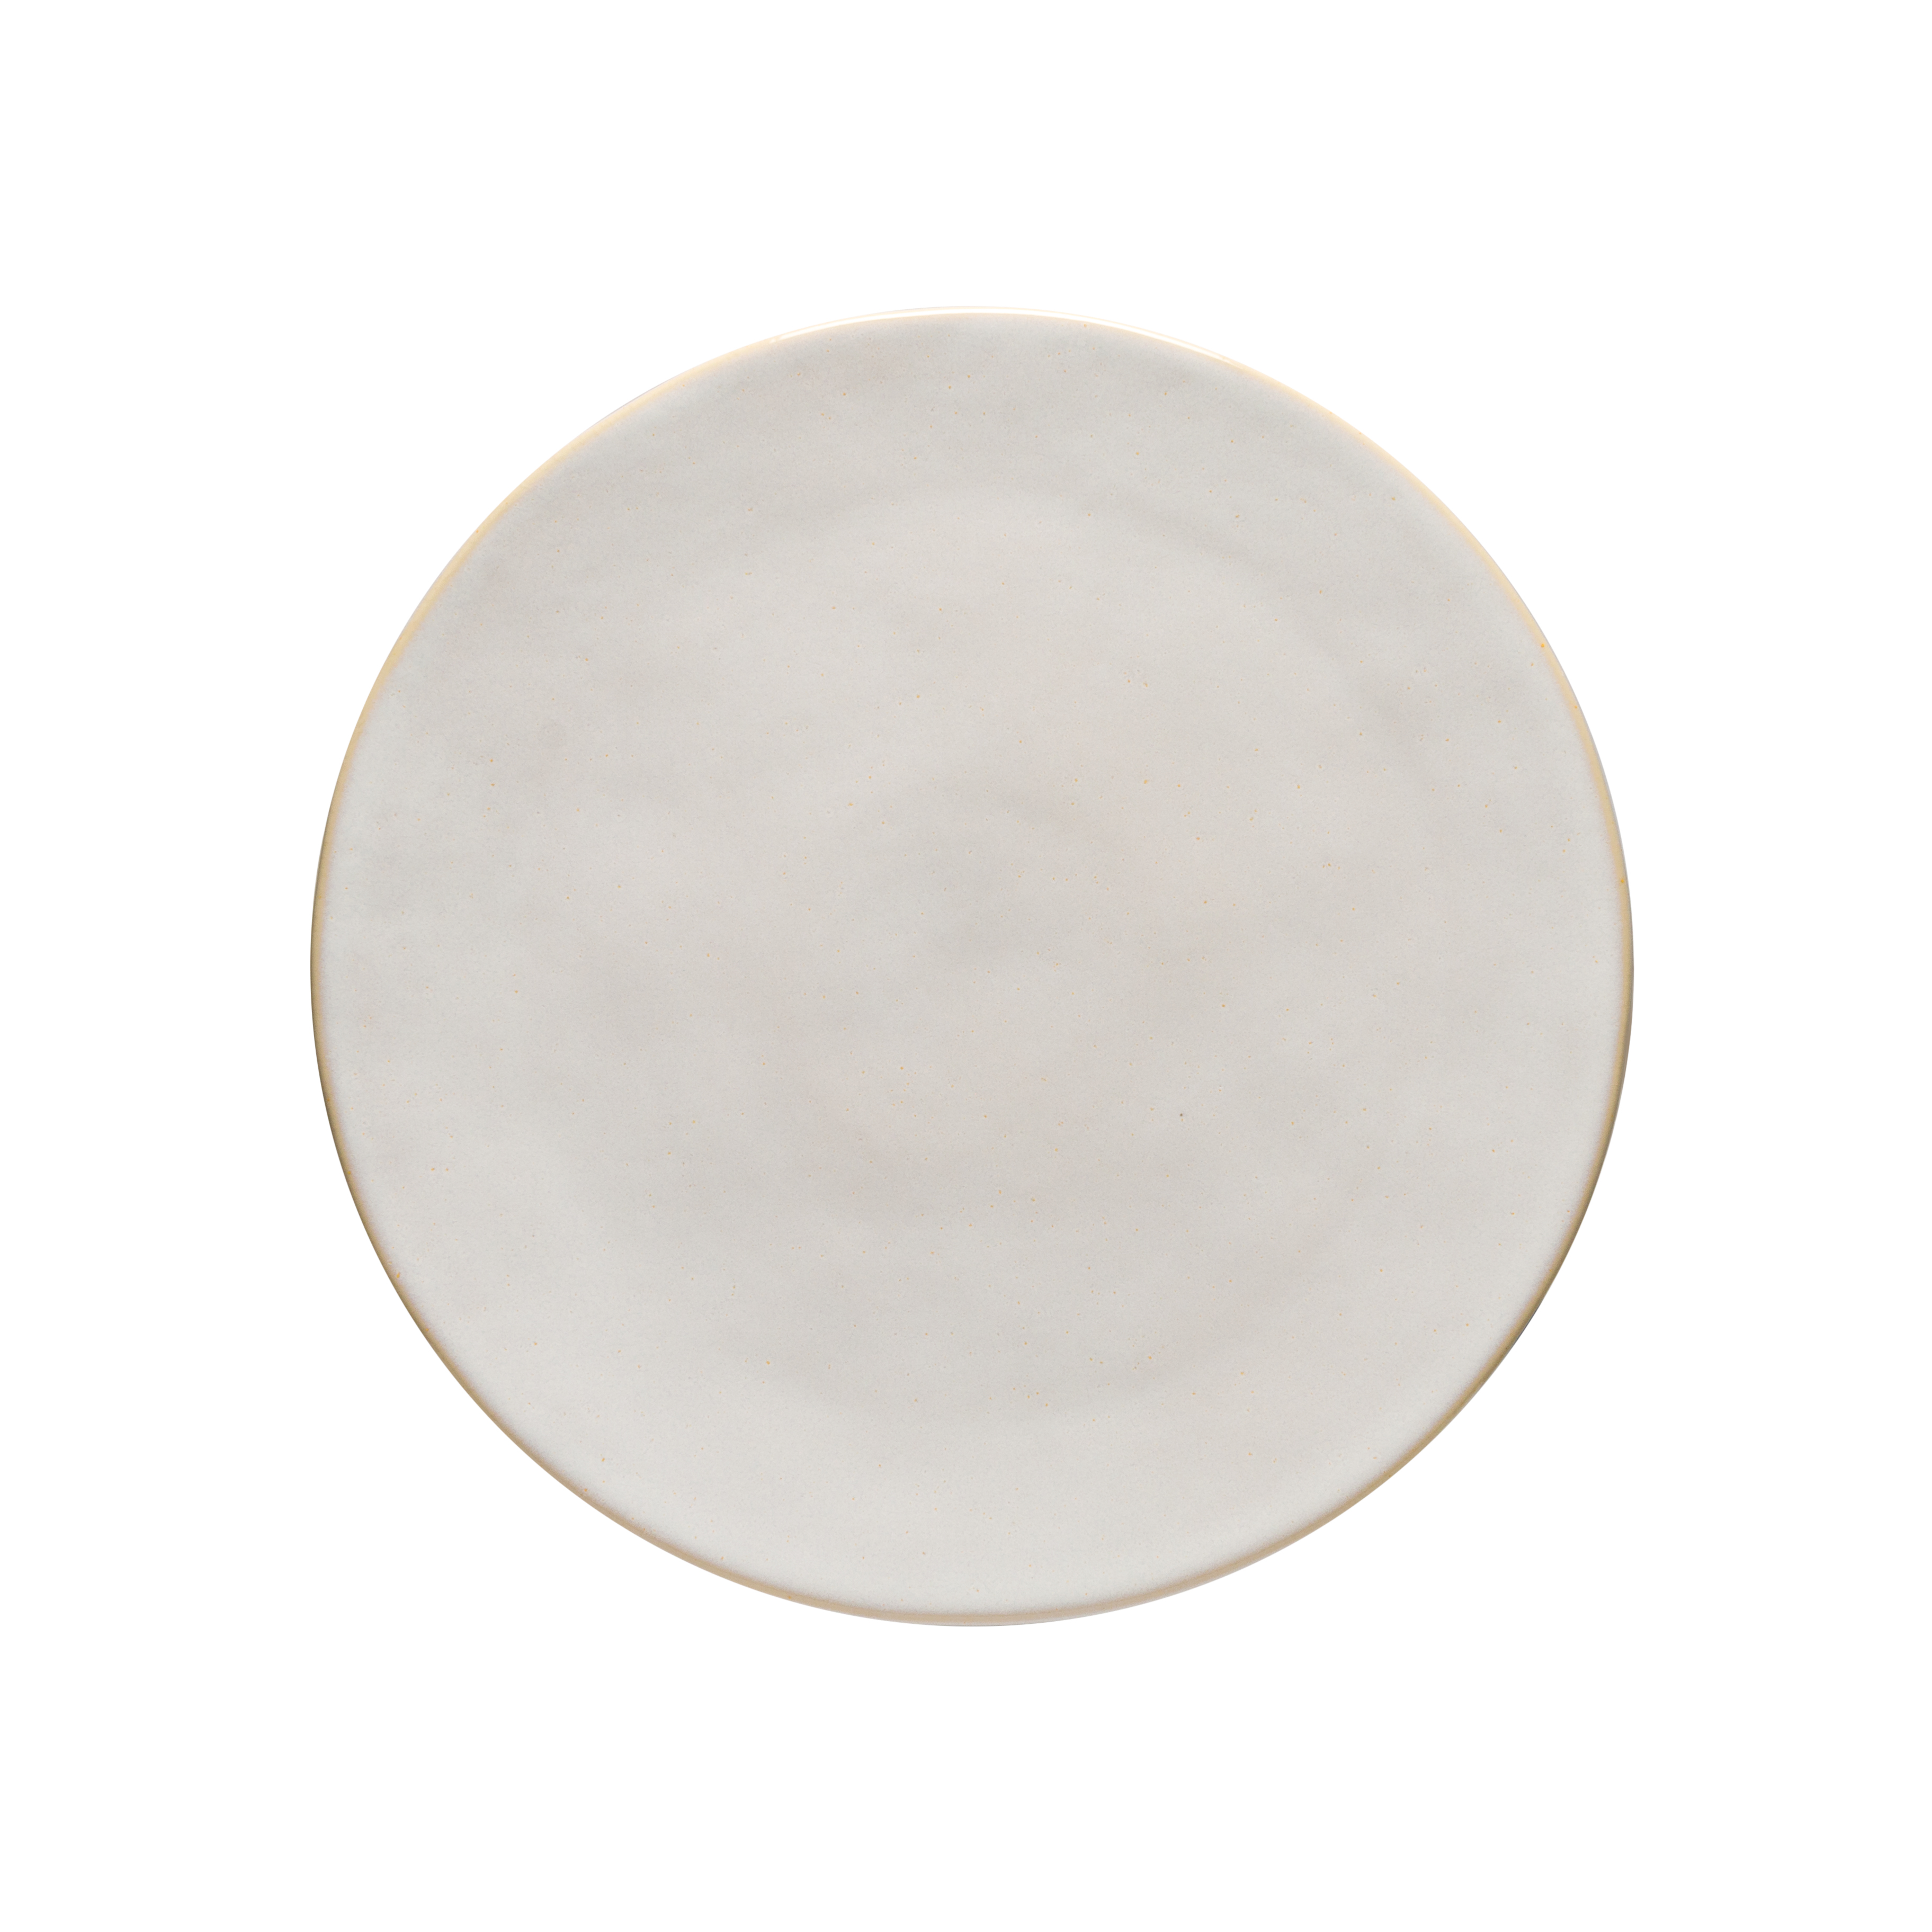 Roda White Round Plate 27.5cm Gift